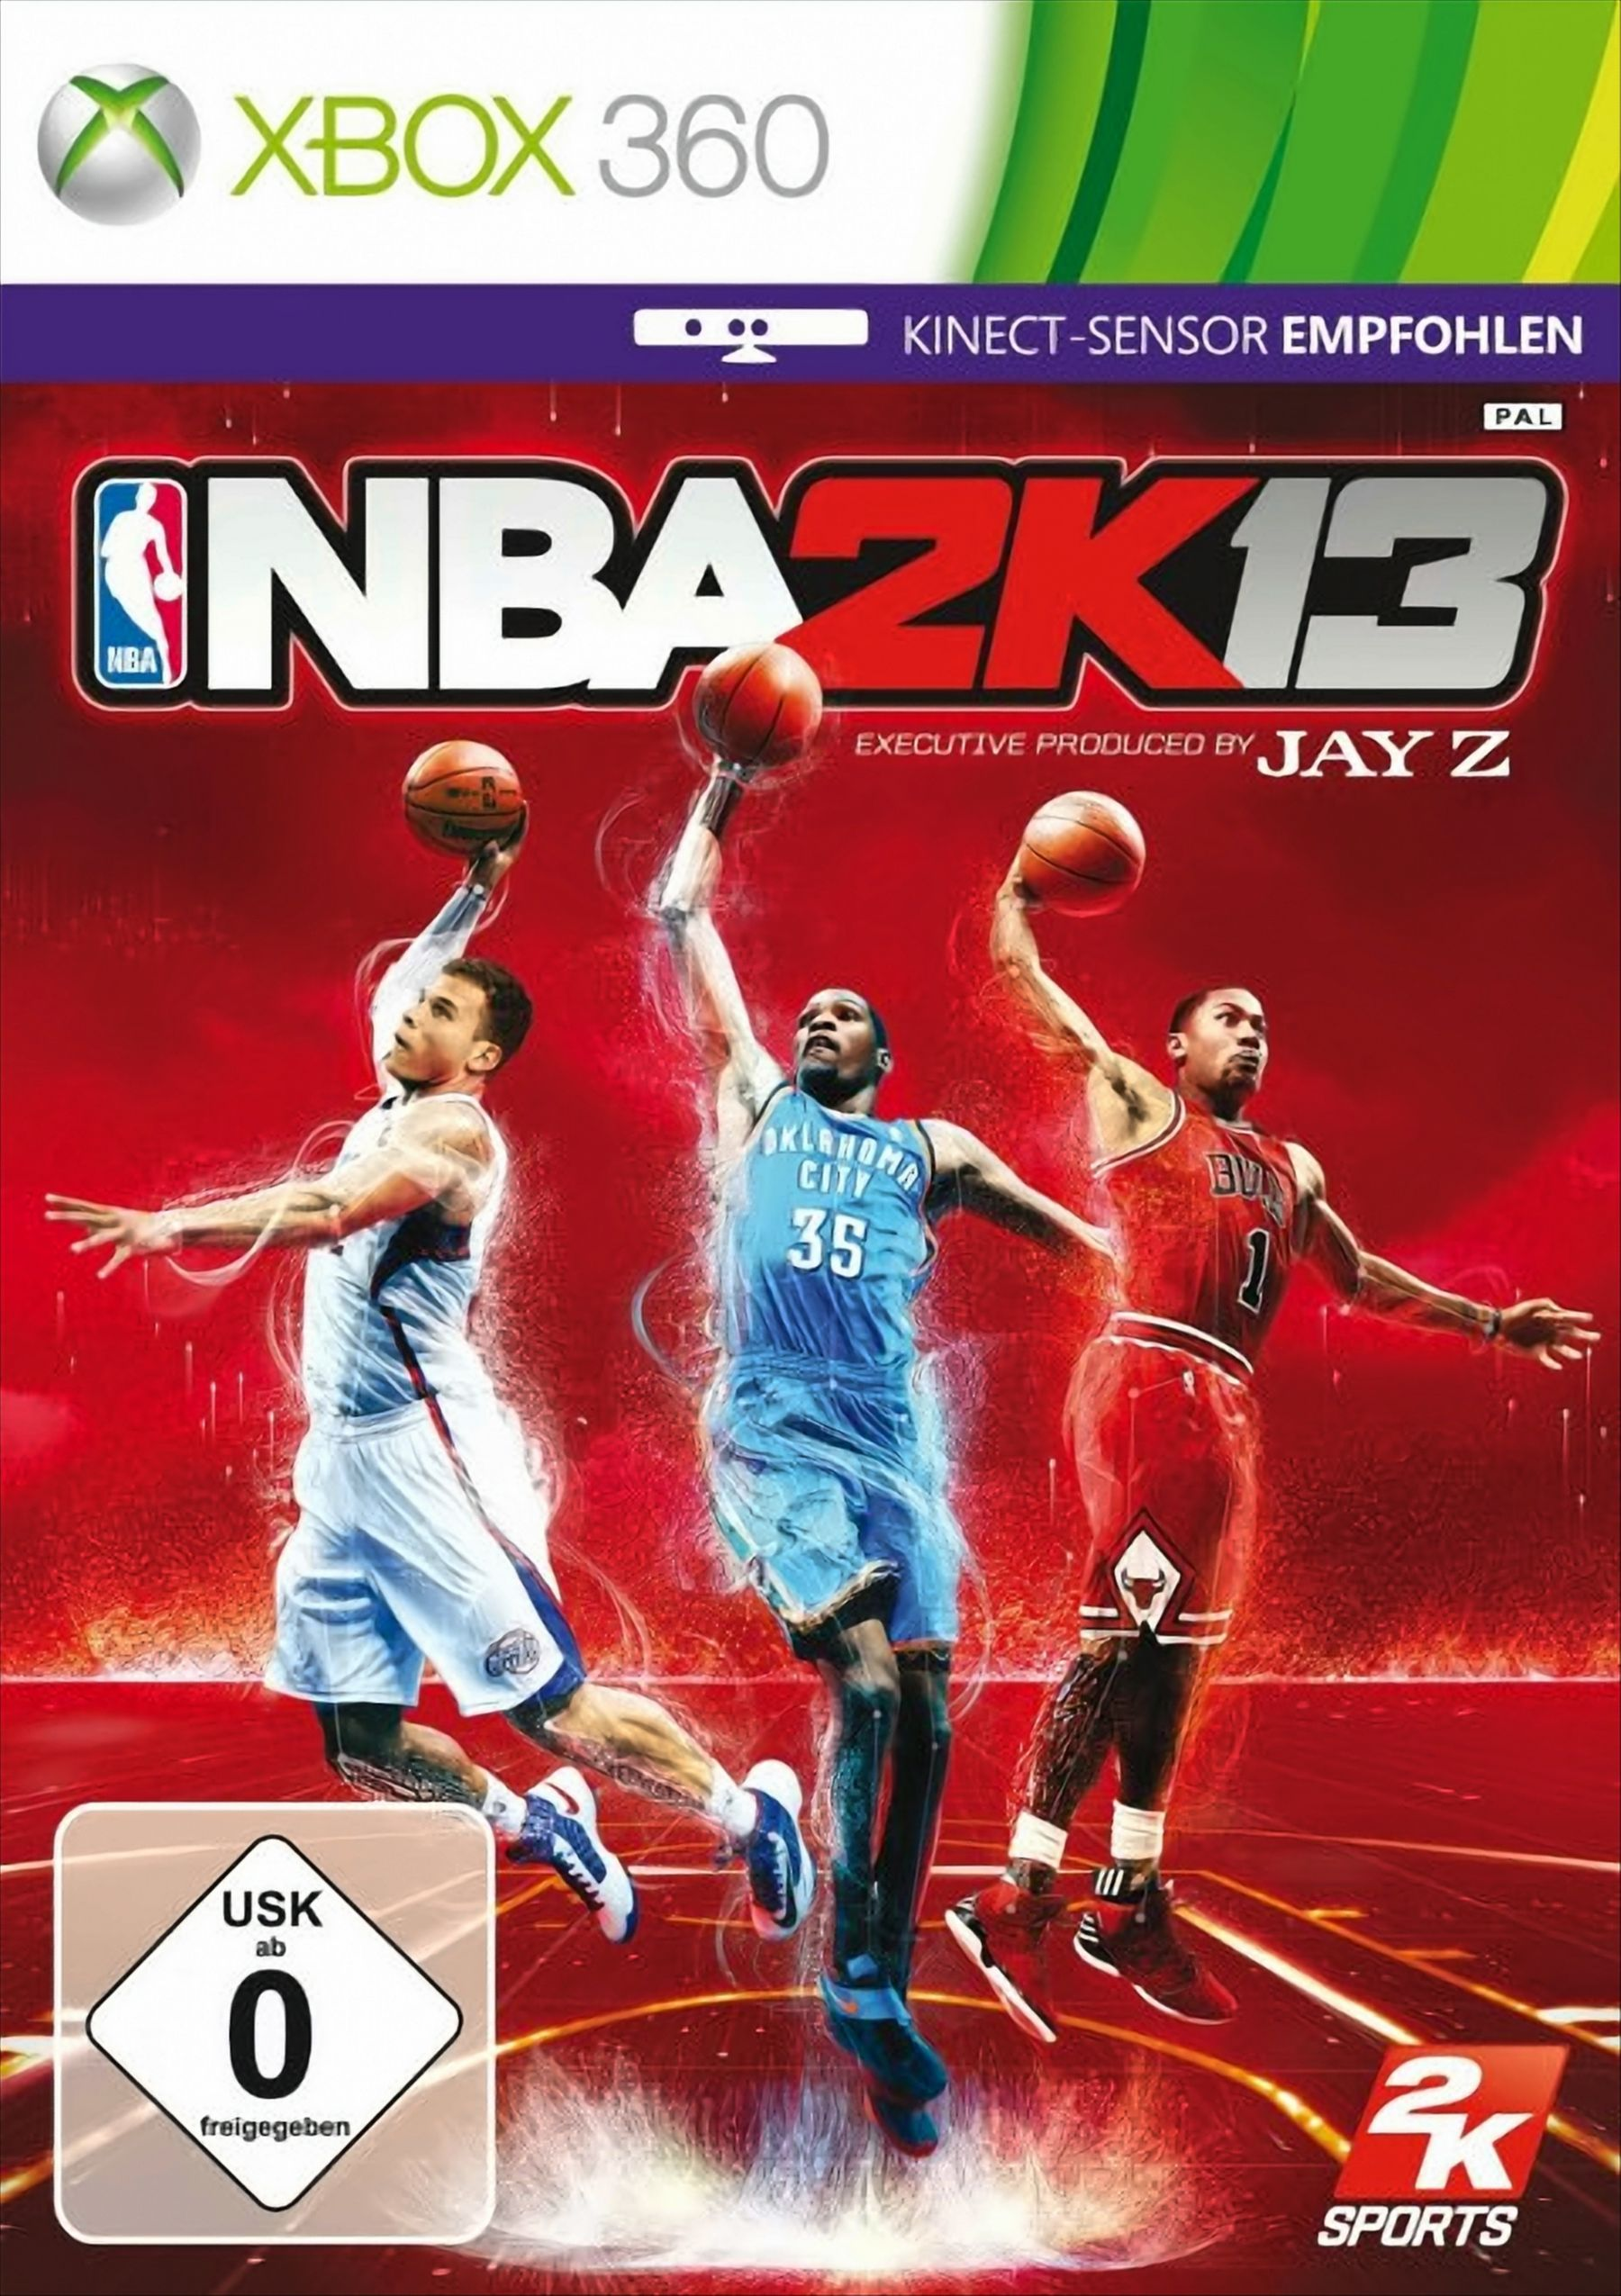 360] [Xbox - 2K13 NBA